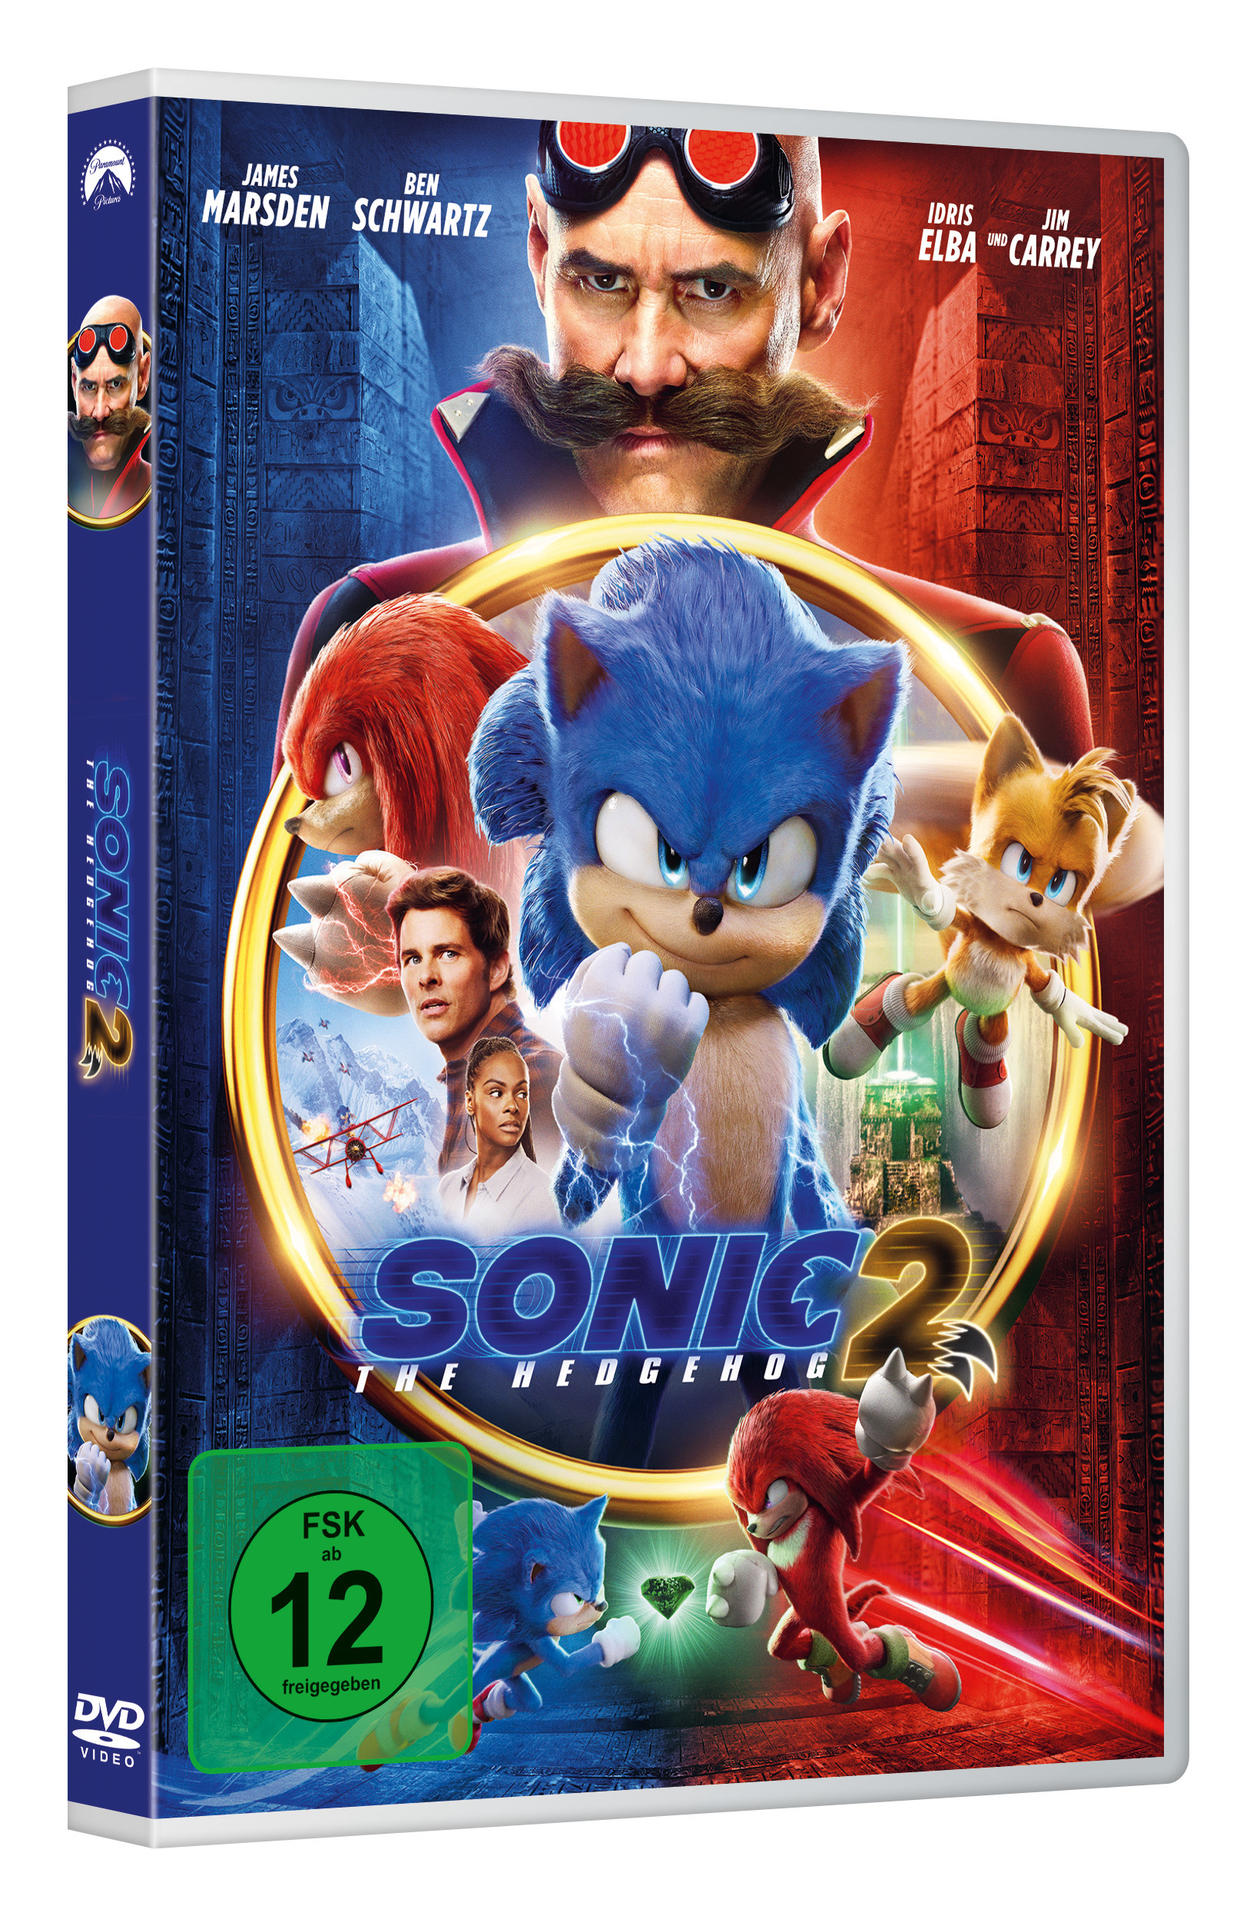 Hedgehog Sonic 2 the DVD